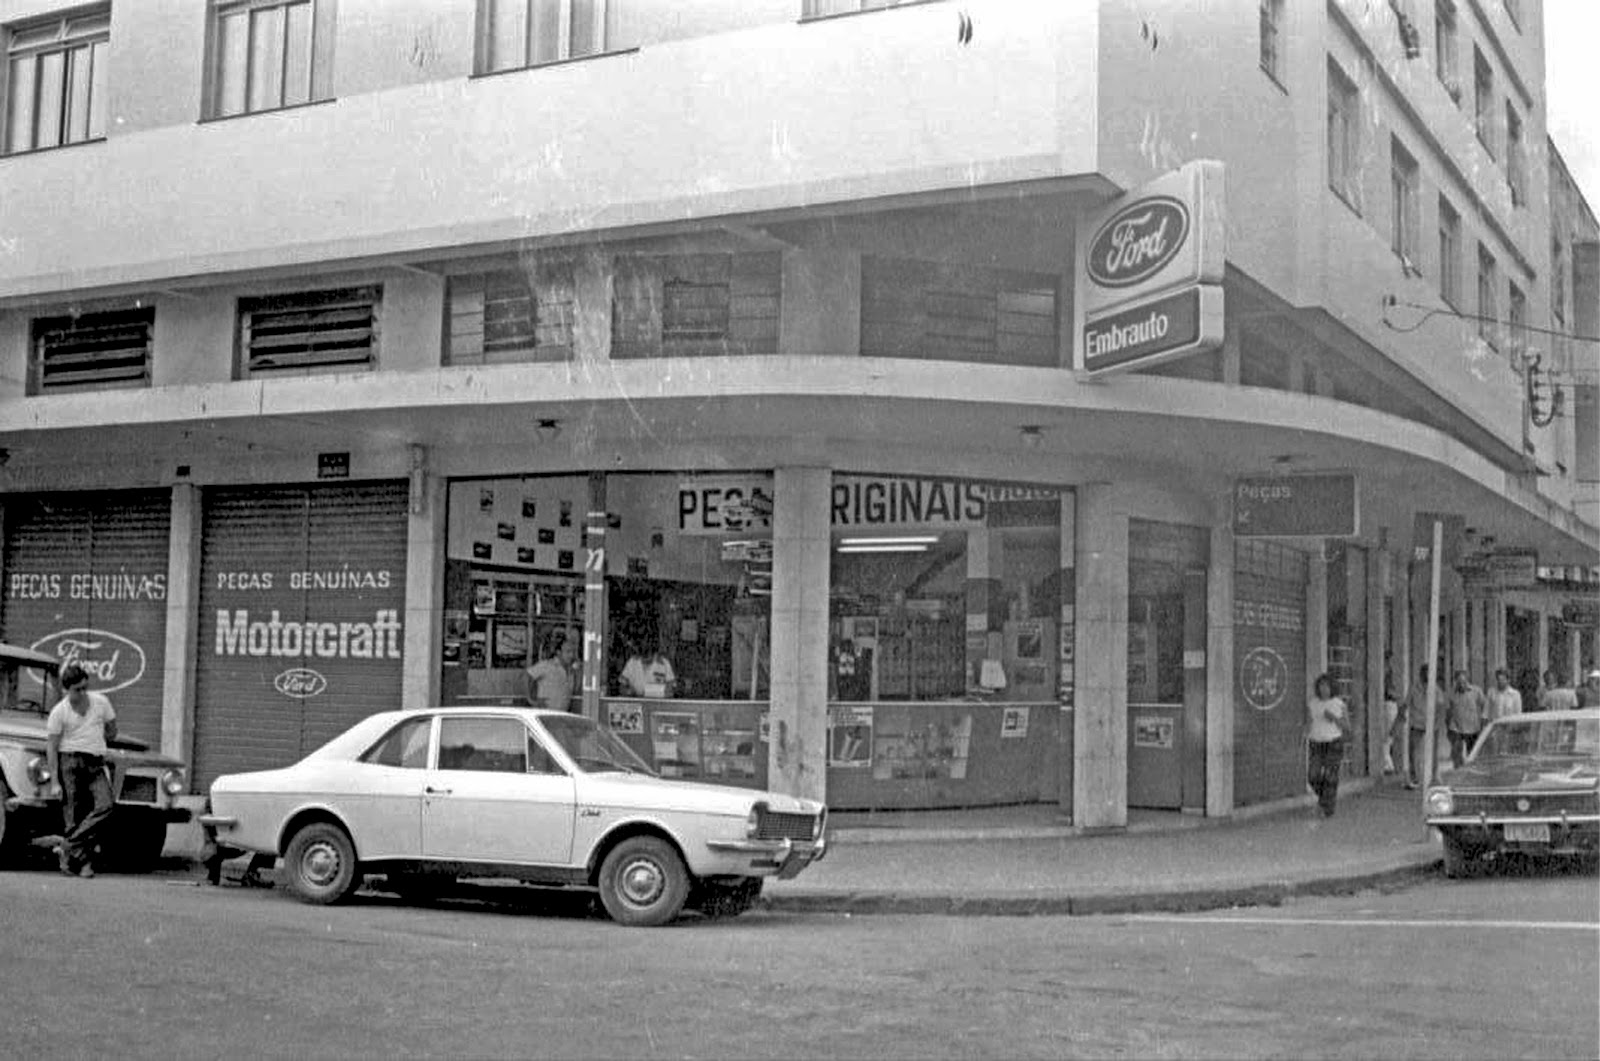 1979 - Fotos de época, só foto antiga de opalas - Página 17 Fd69s2